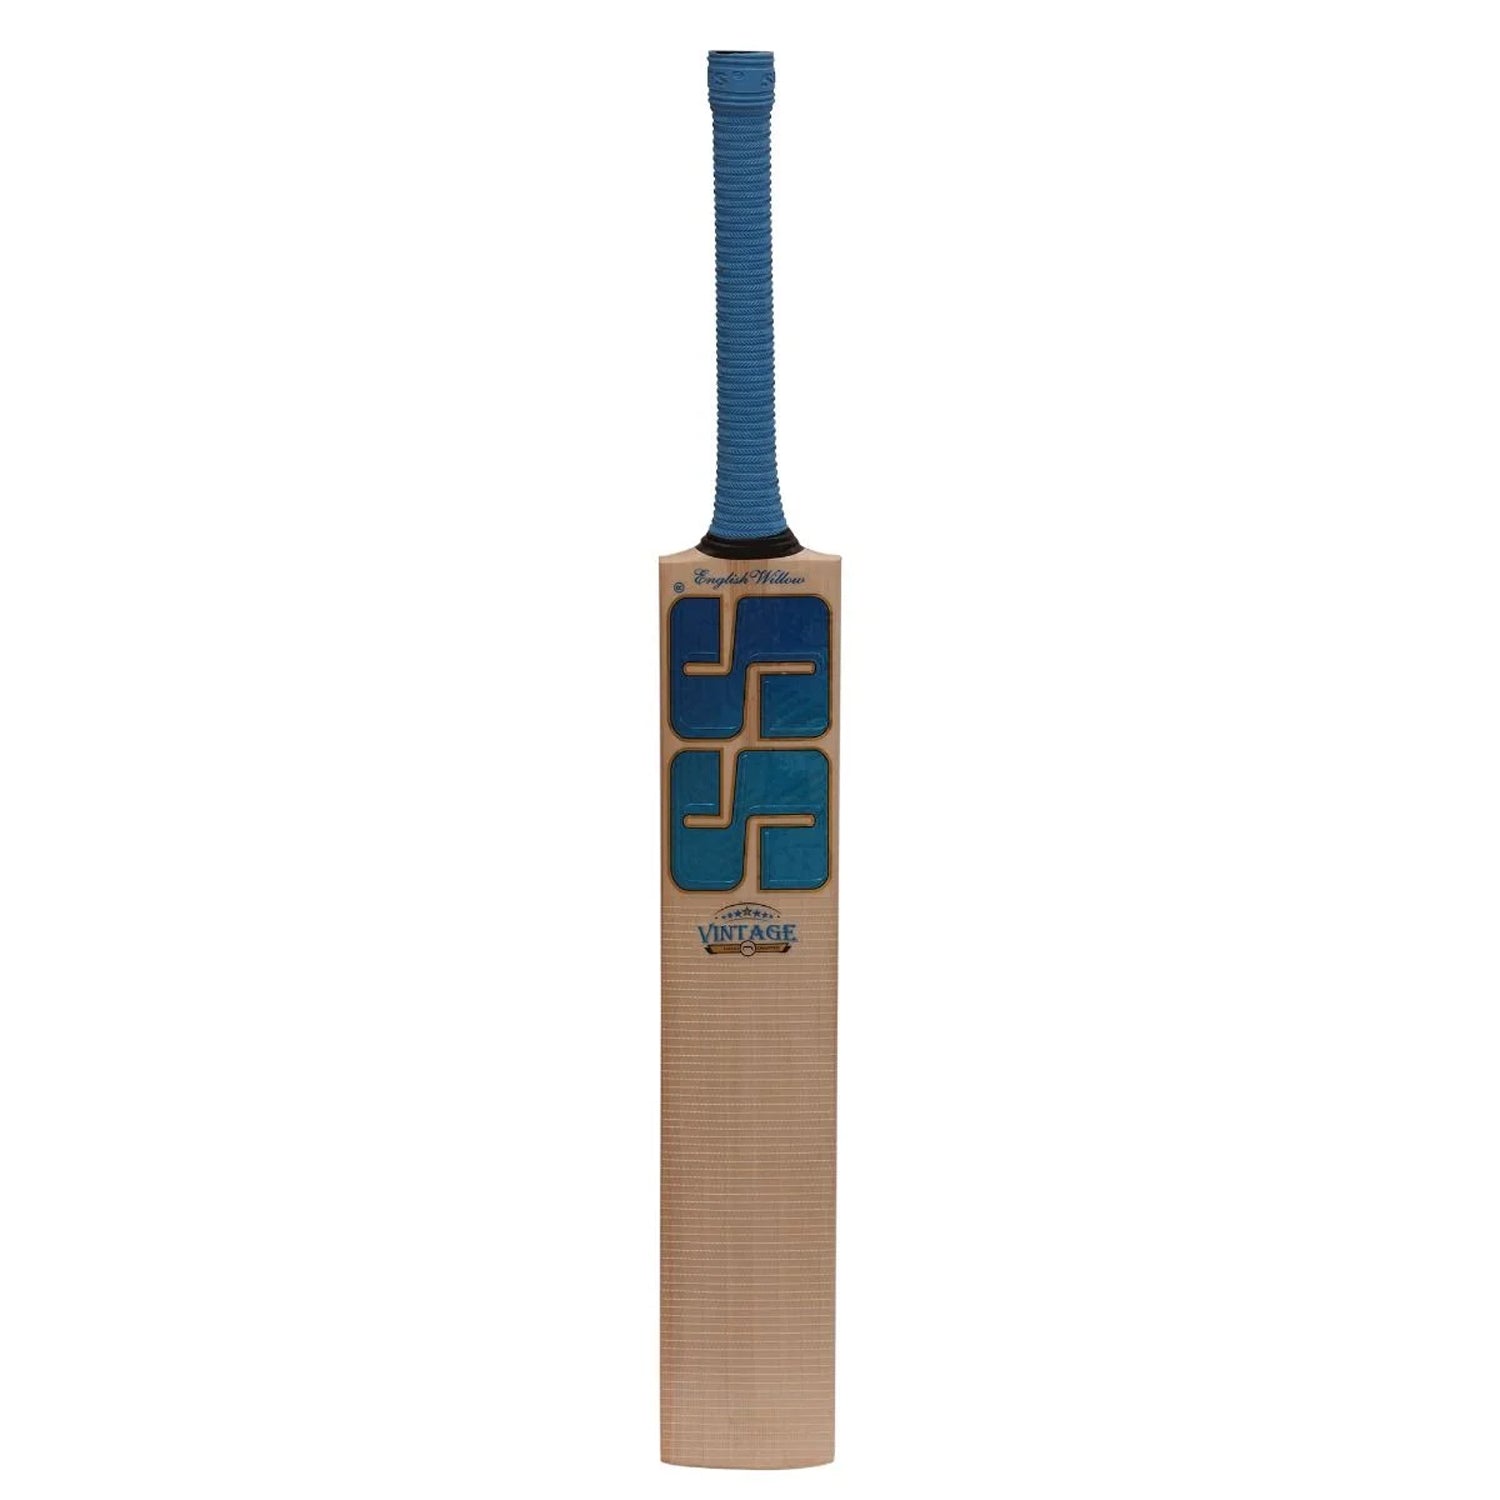 SS Vintage 6.0 English Willow Cricket Bat - Best Price online Prokicksports.com